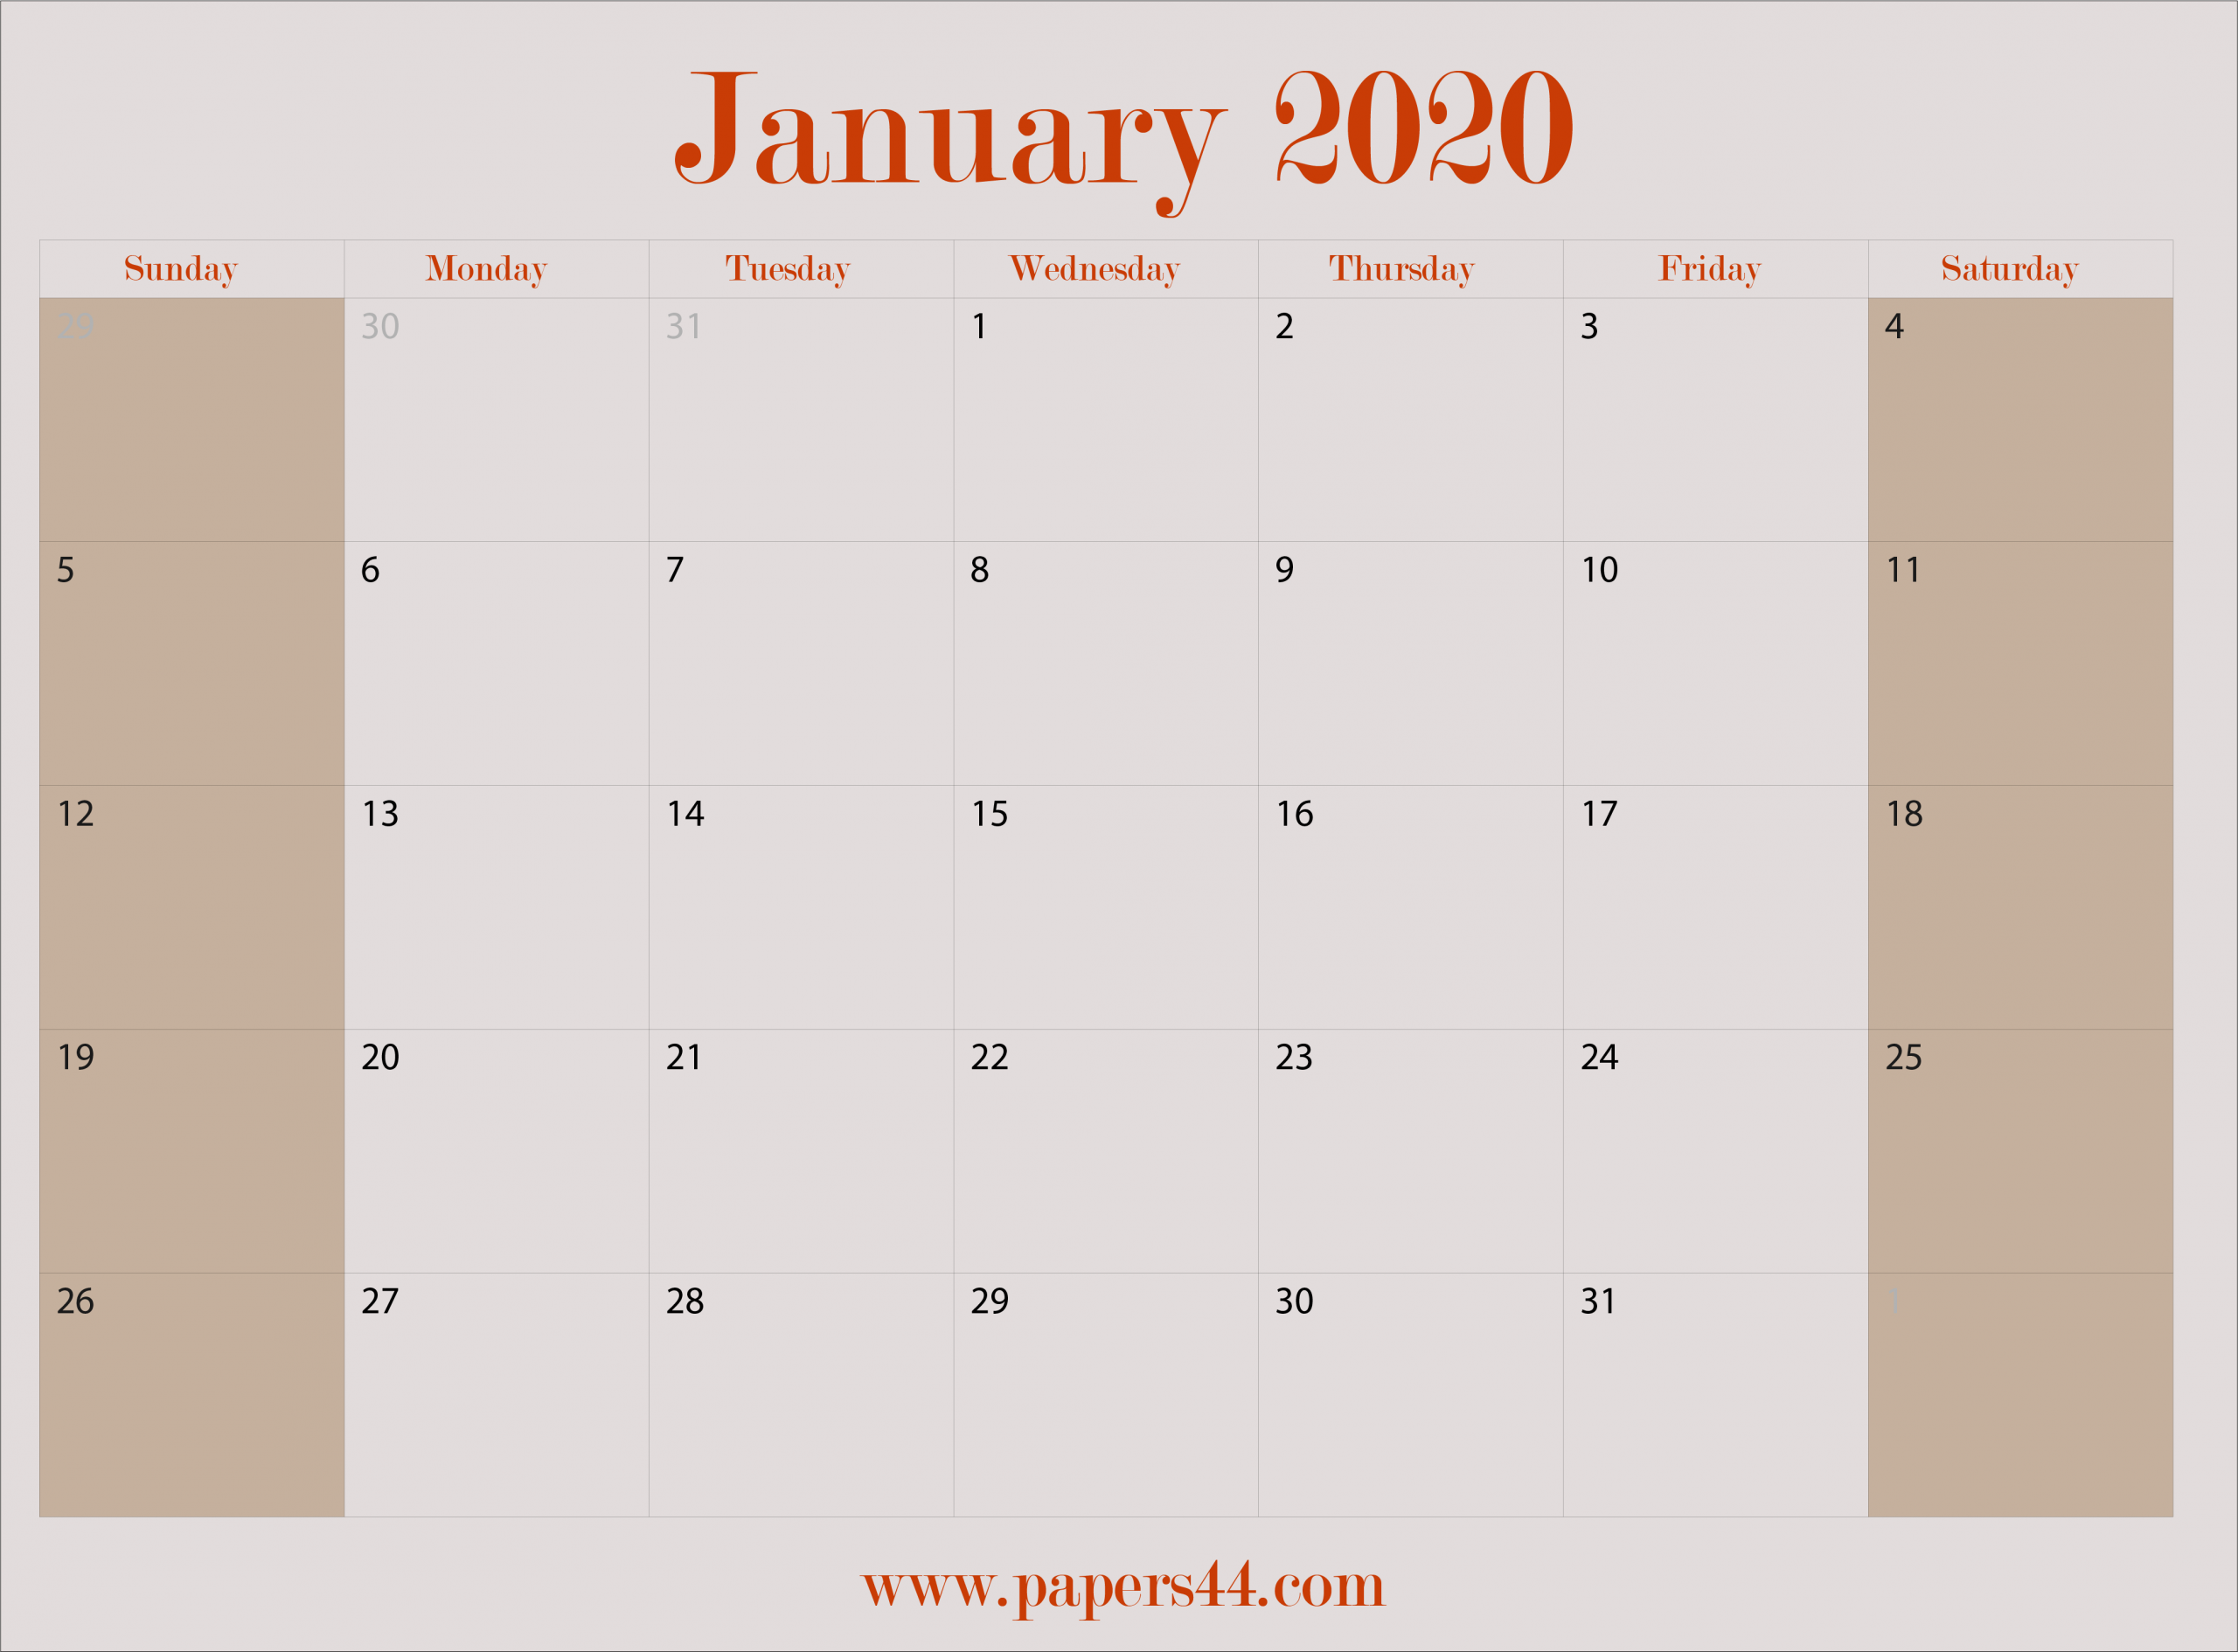 Free 2020 January Calendars - Pdf